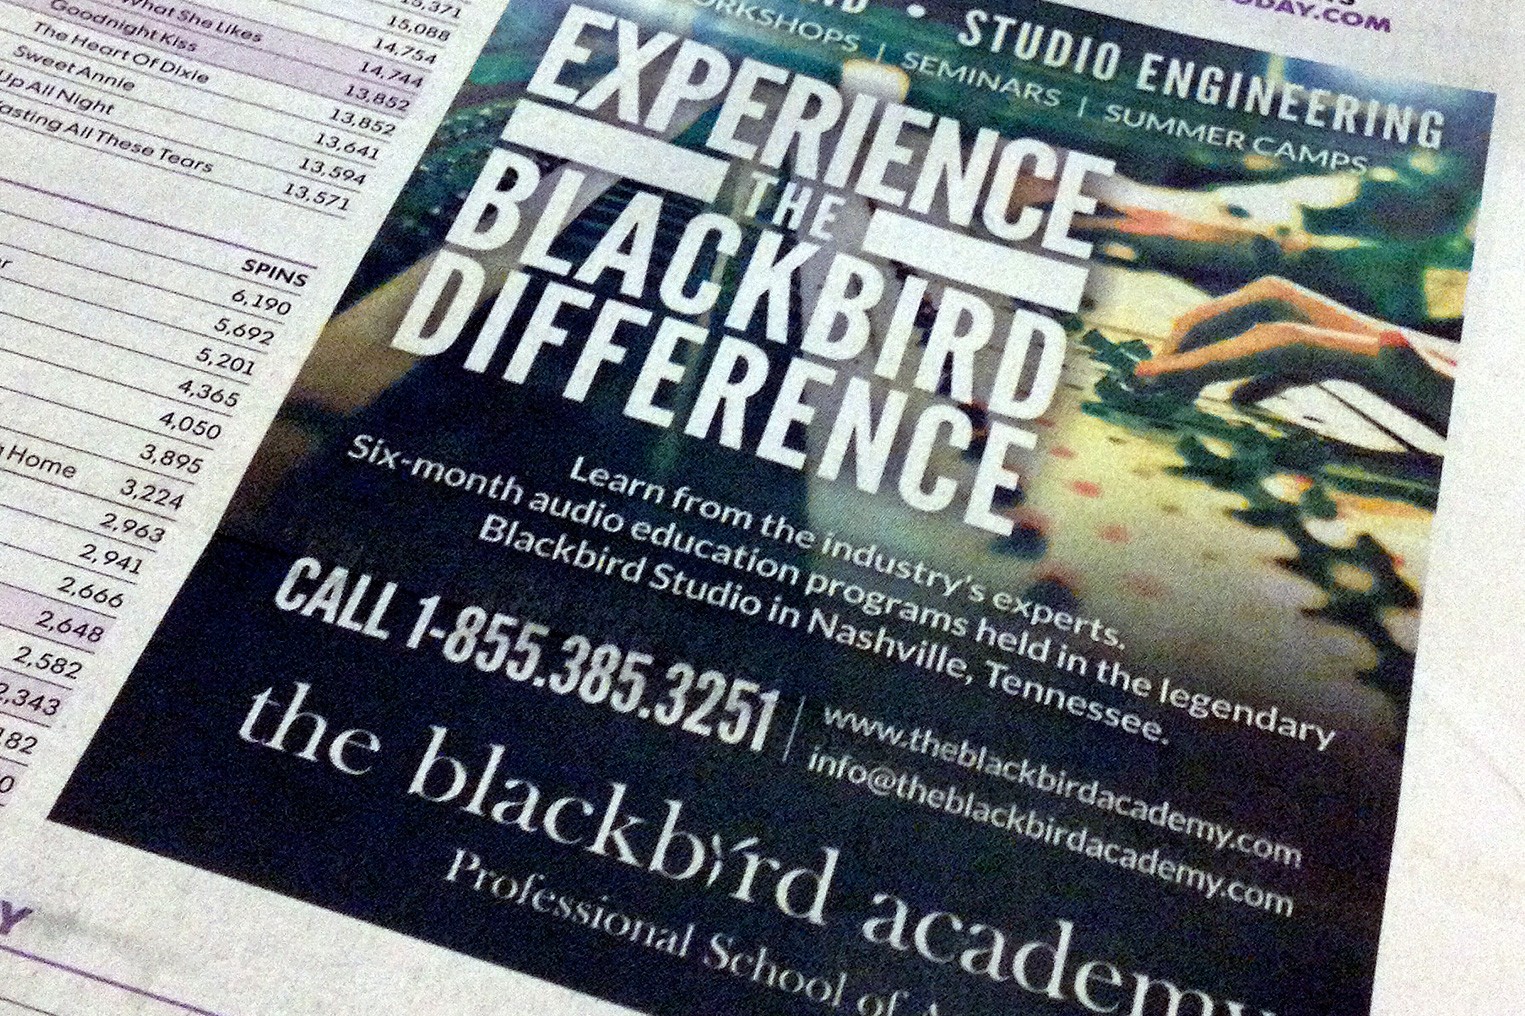 The Blackbird Academy, USA Today ad